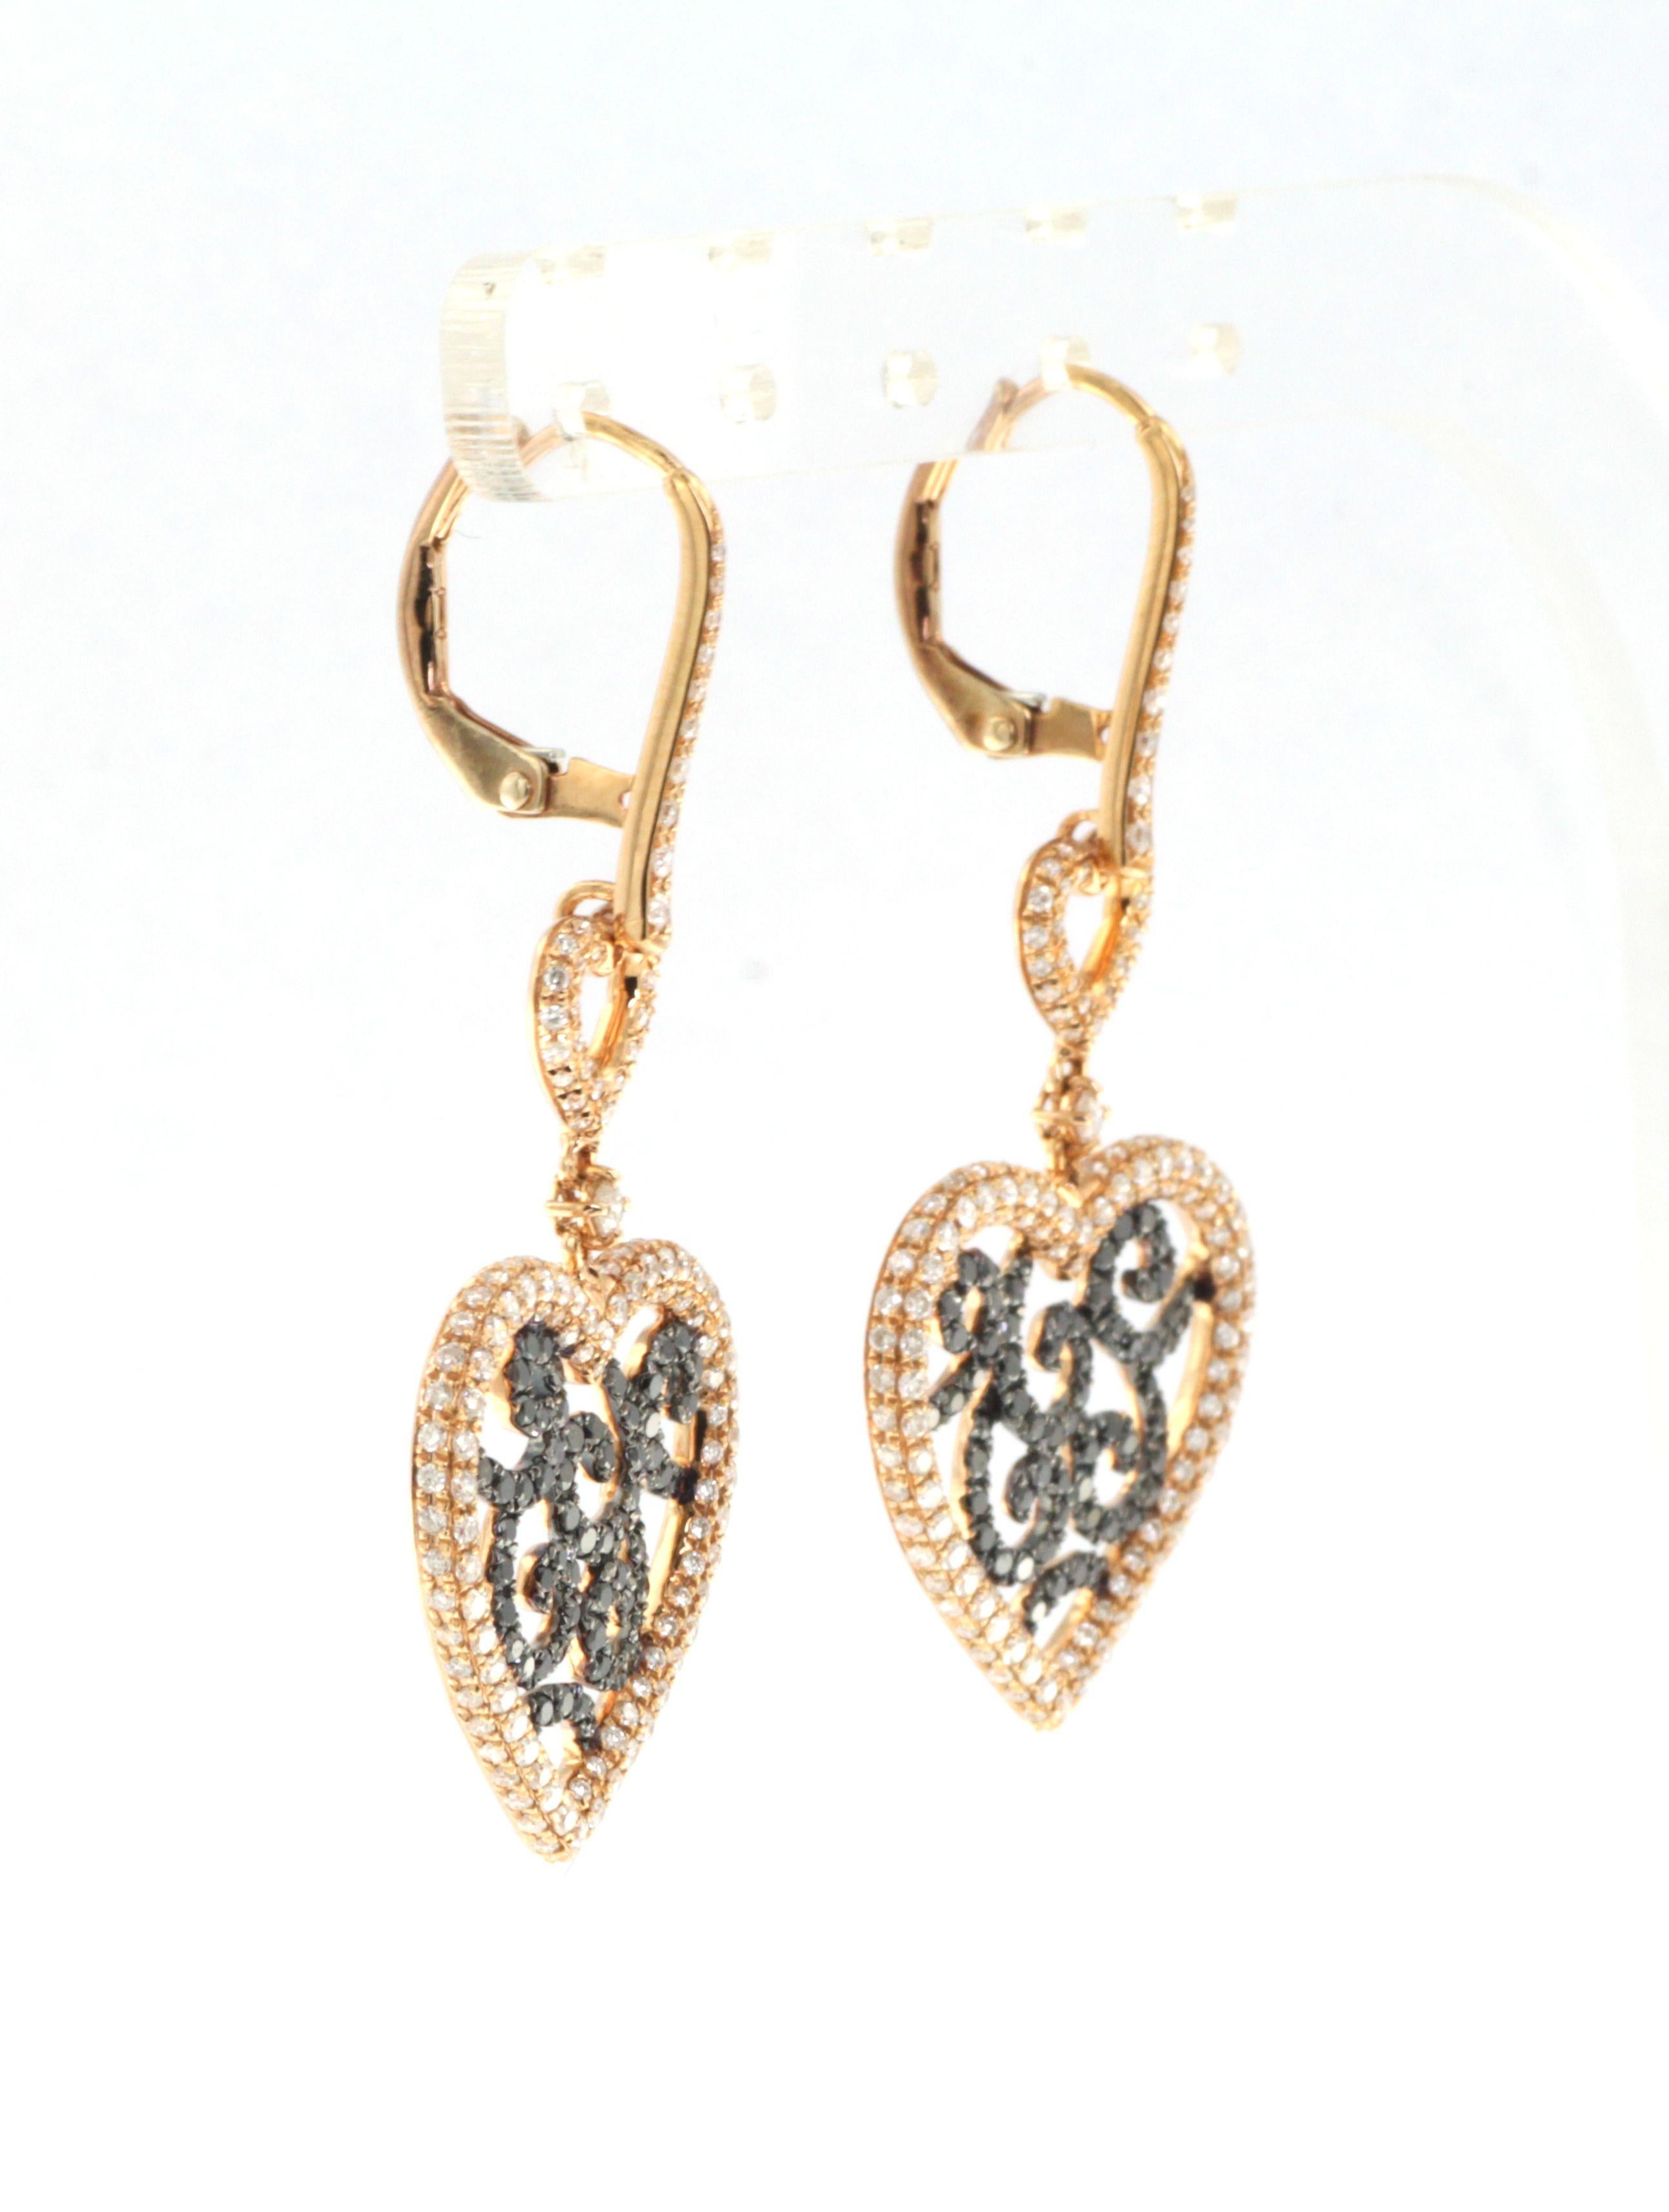 Brilliant Cut Art Deco White and Black Diamonds Heart Shape Dangle Earrings in 18k Rose Gold For Sale